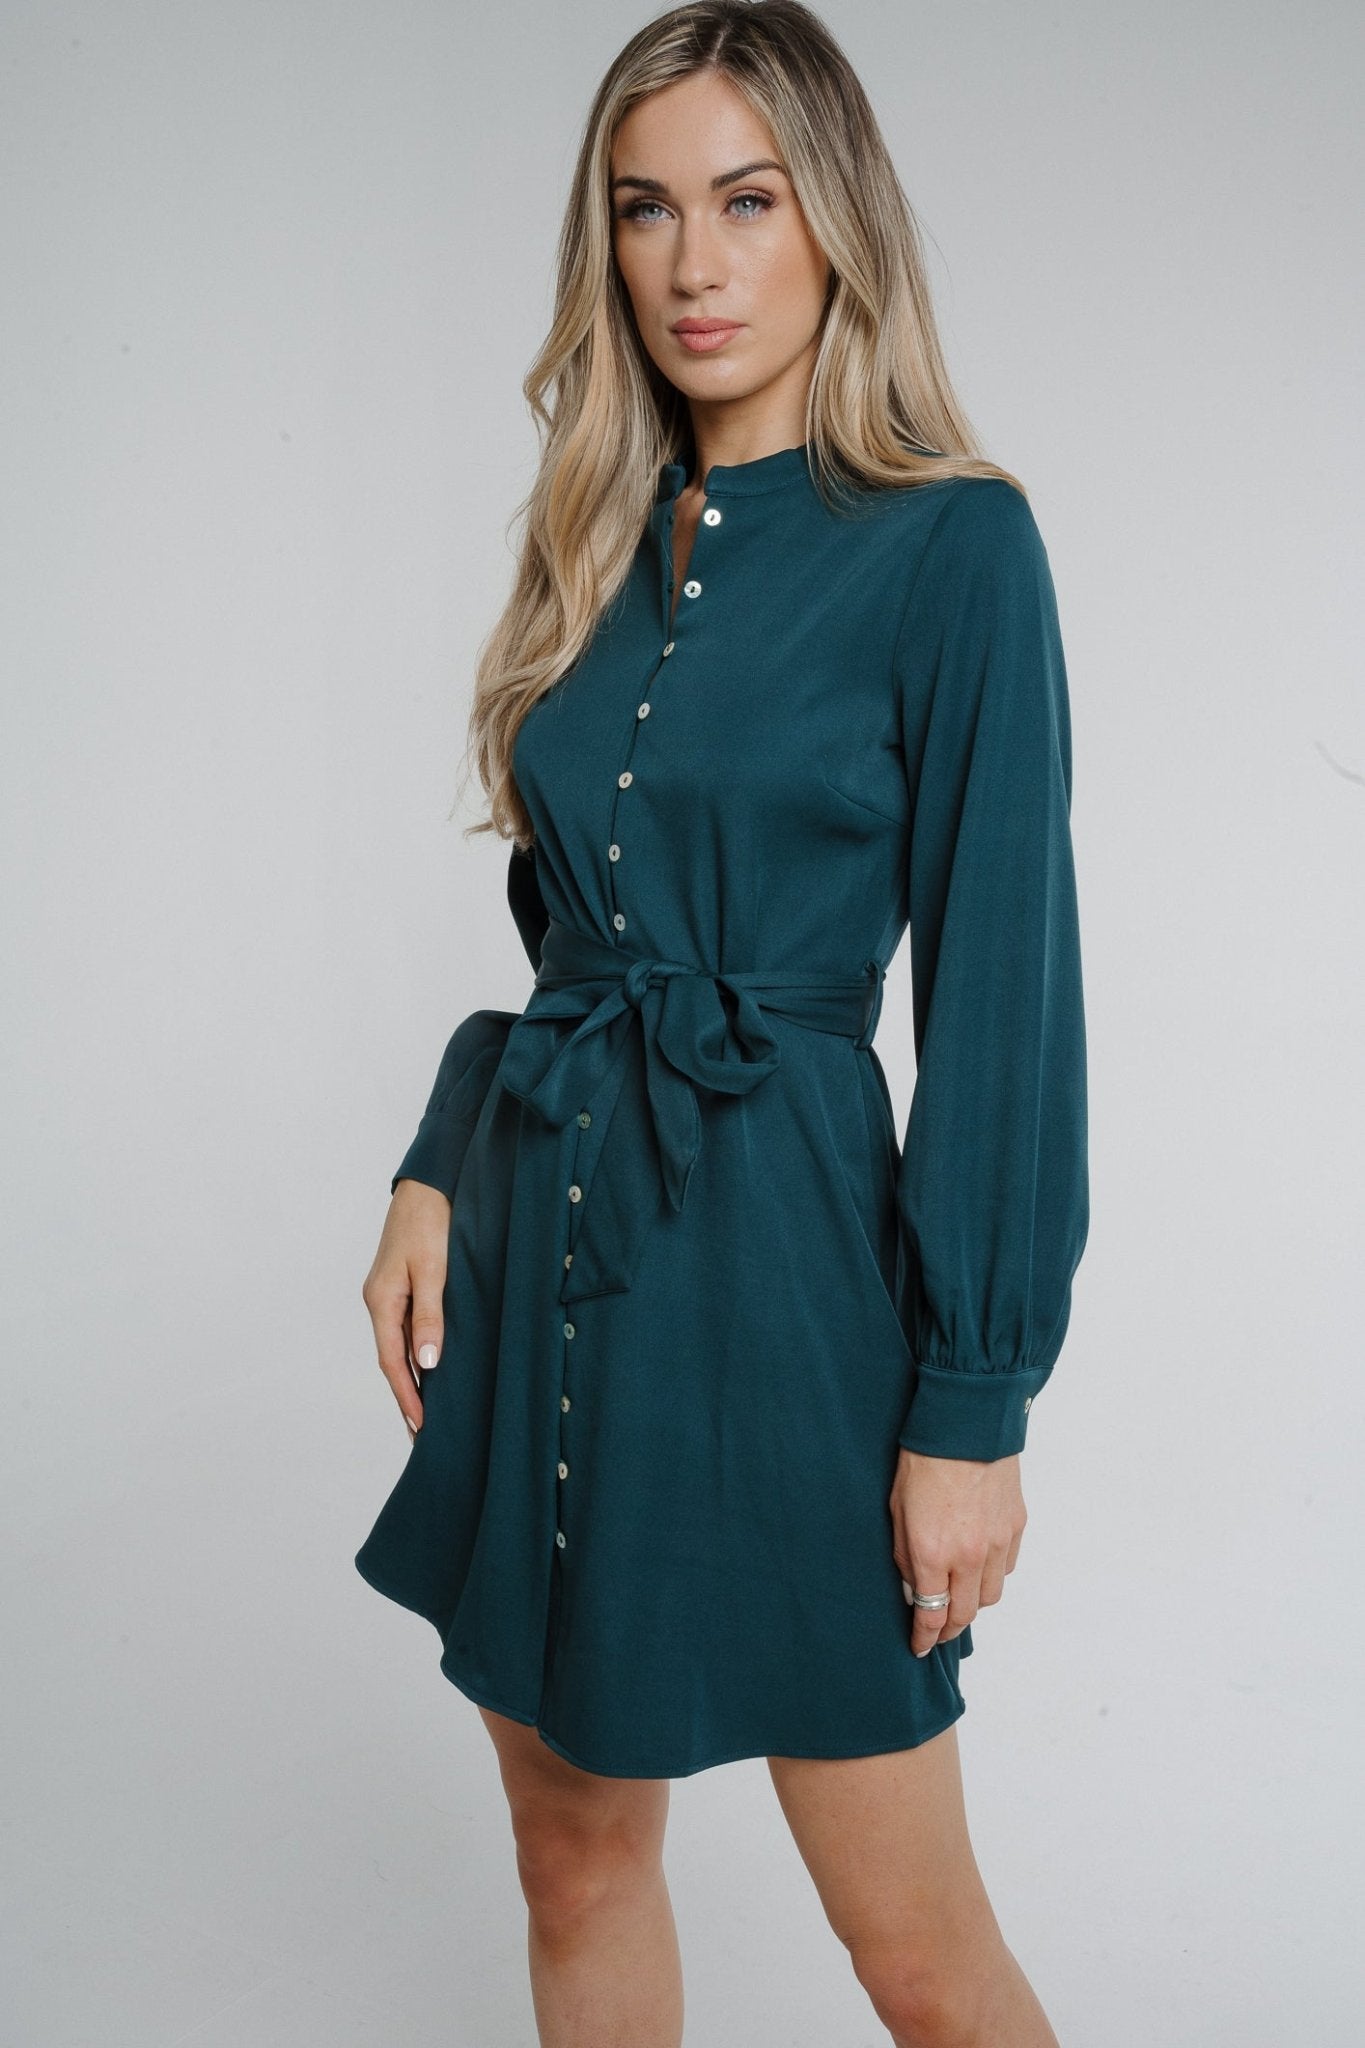 Becca Button Front Dress In Jade Green - The Walk in Wardrobe